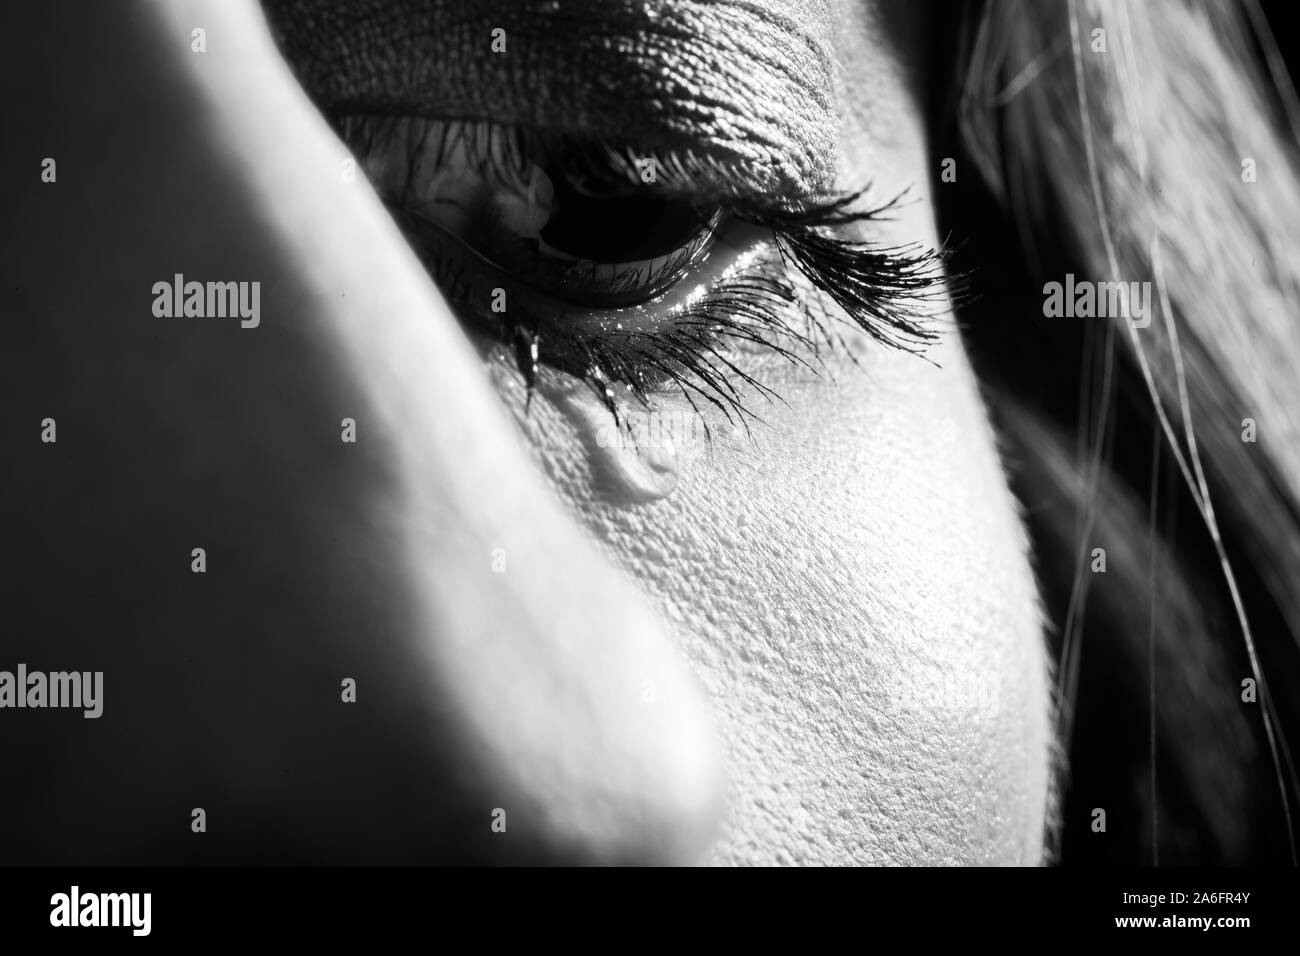 Sad Woman Crying Tear On Eye Closeup Portrait Monochrome Stock